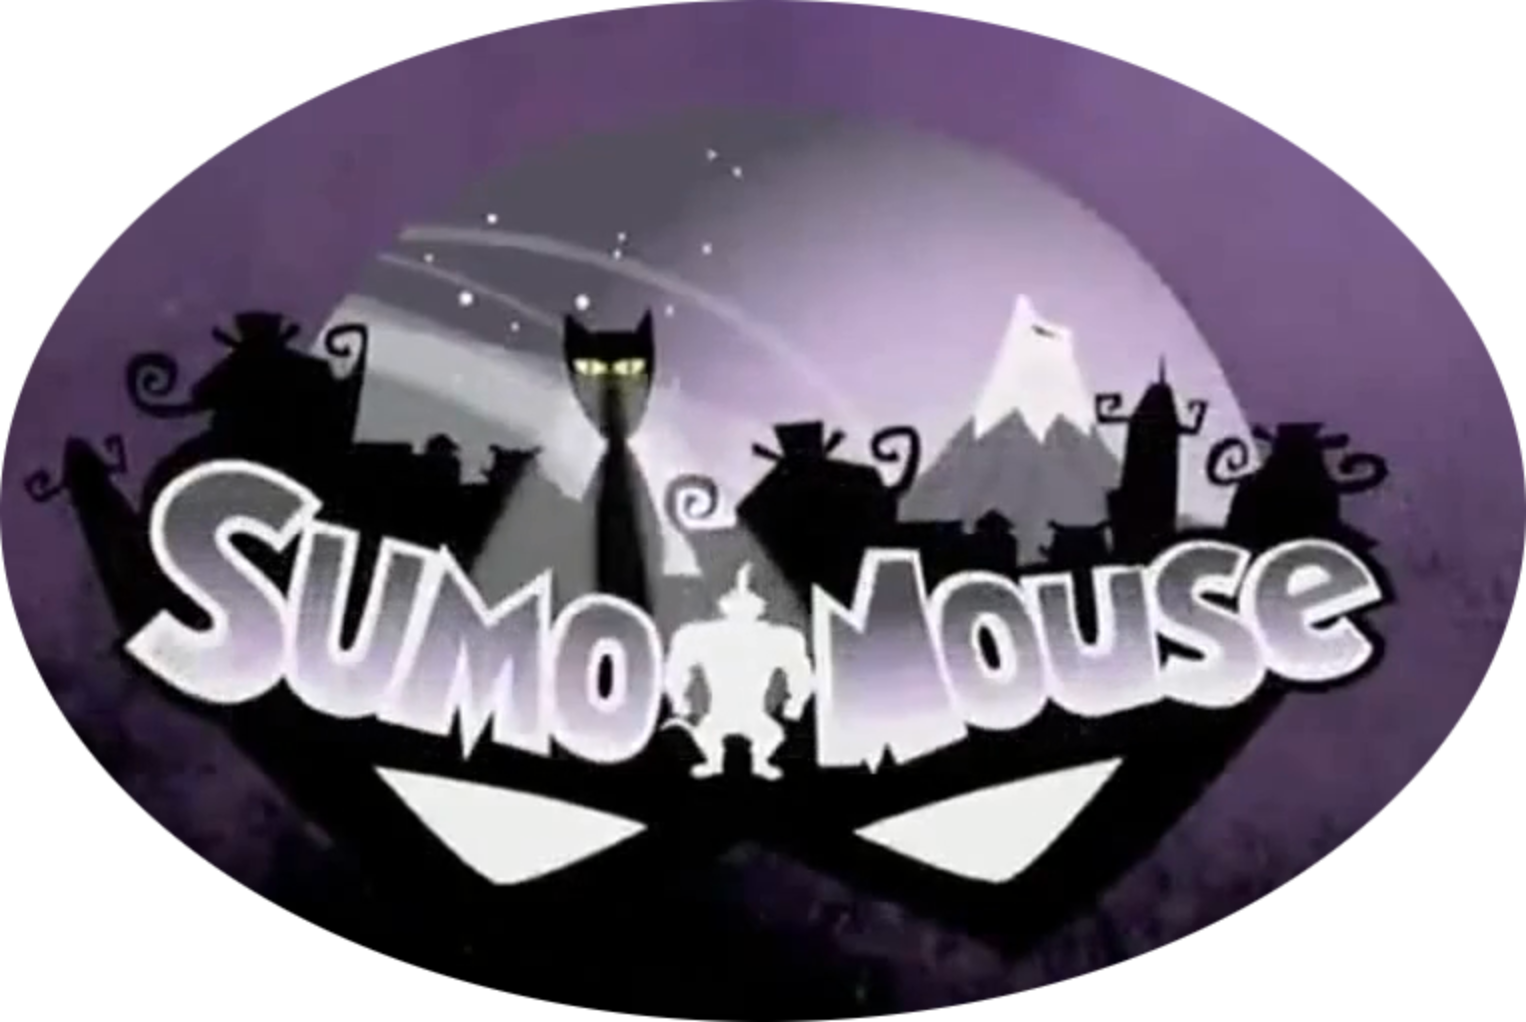 Sumo Mouse Complete (3 DVDs Box Set)